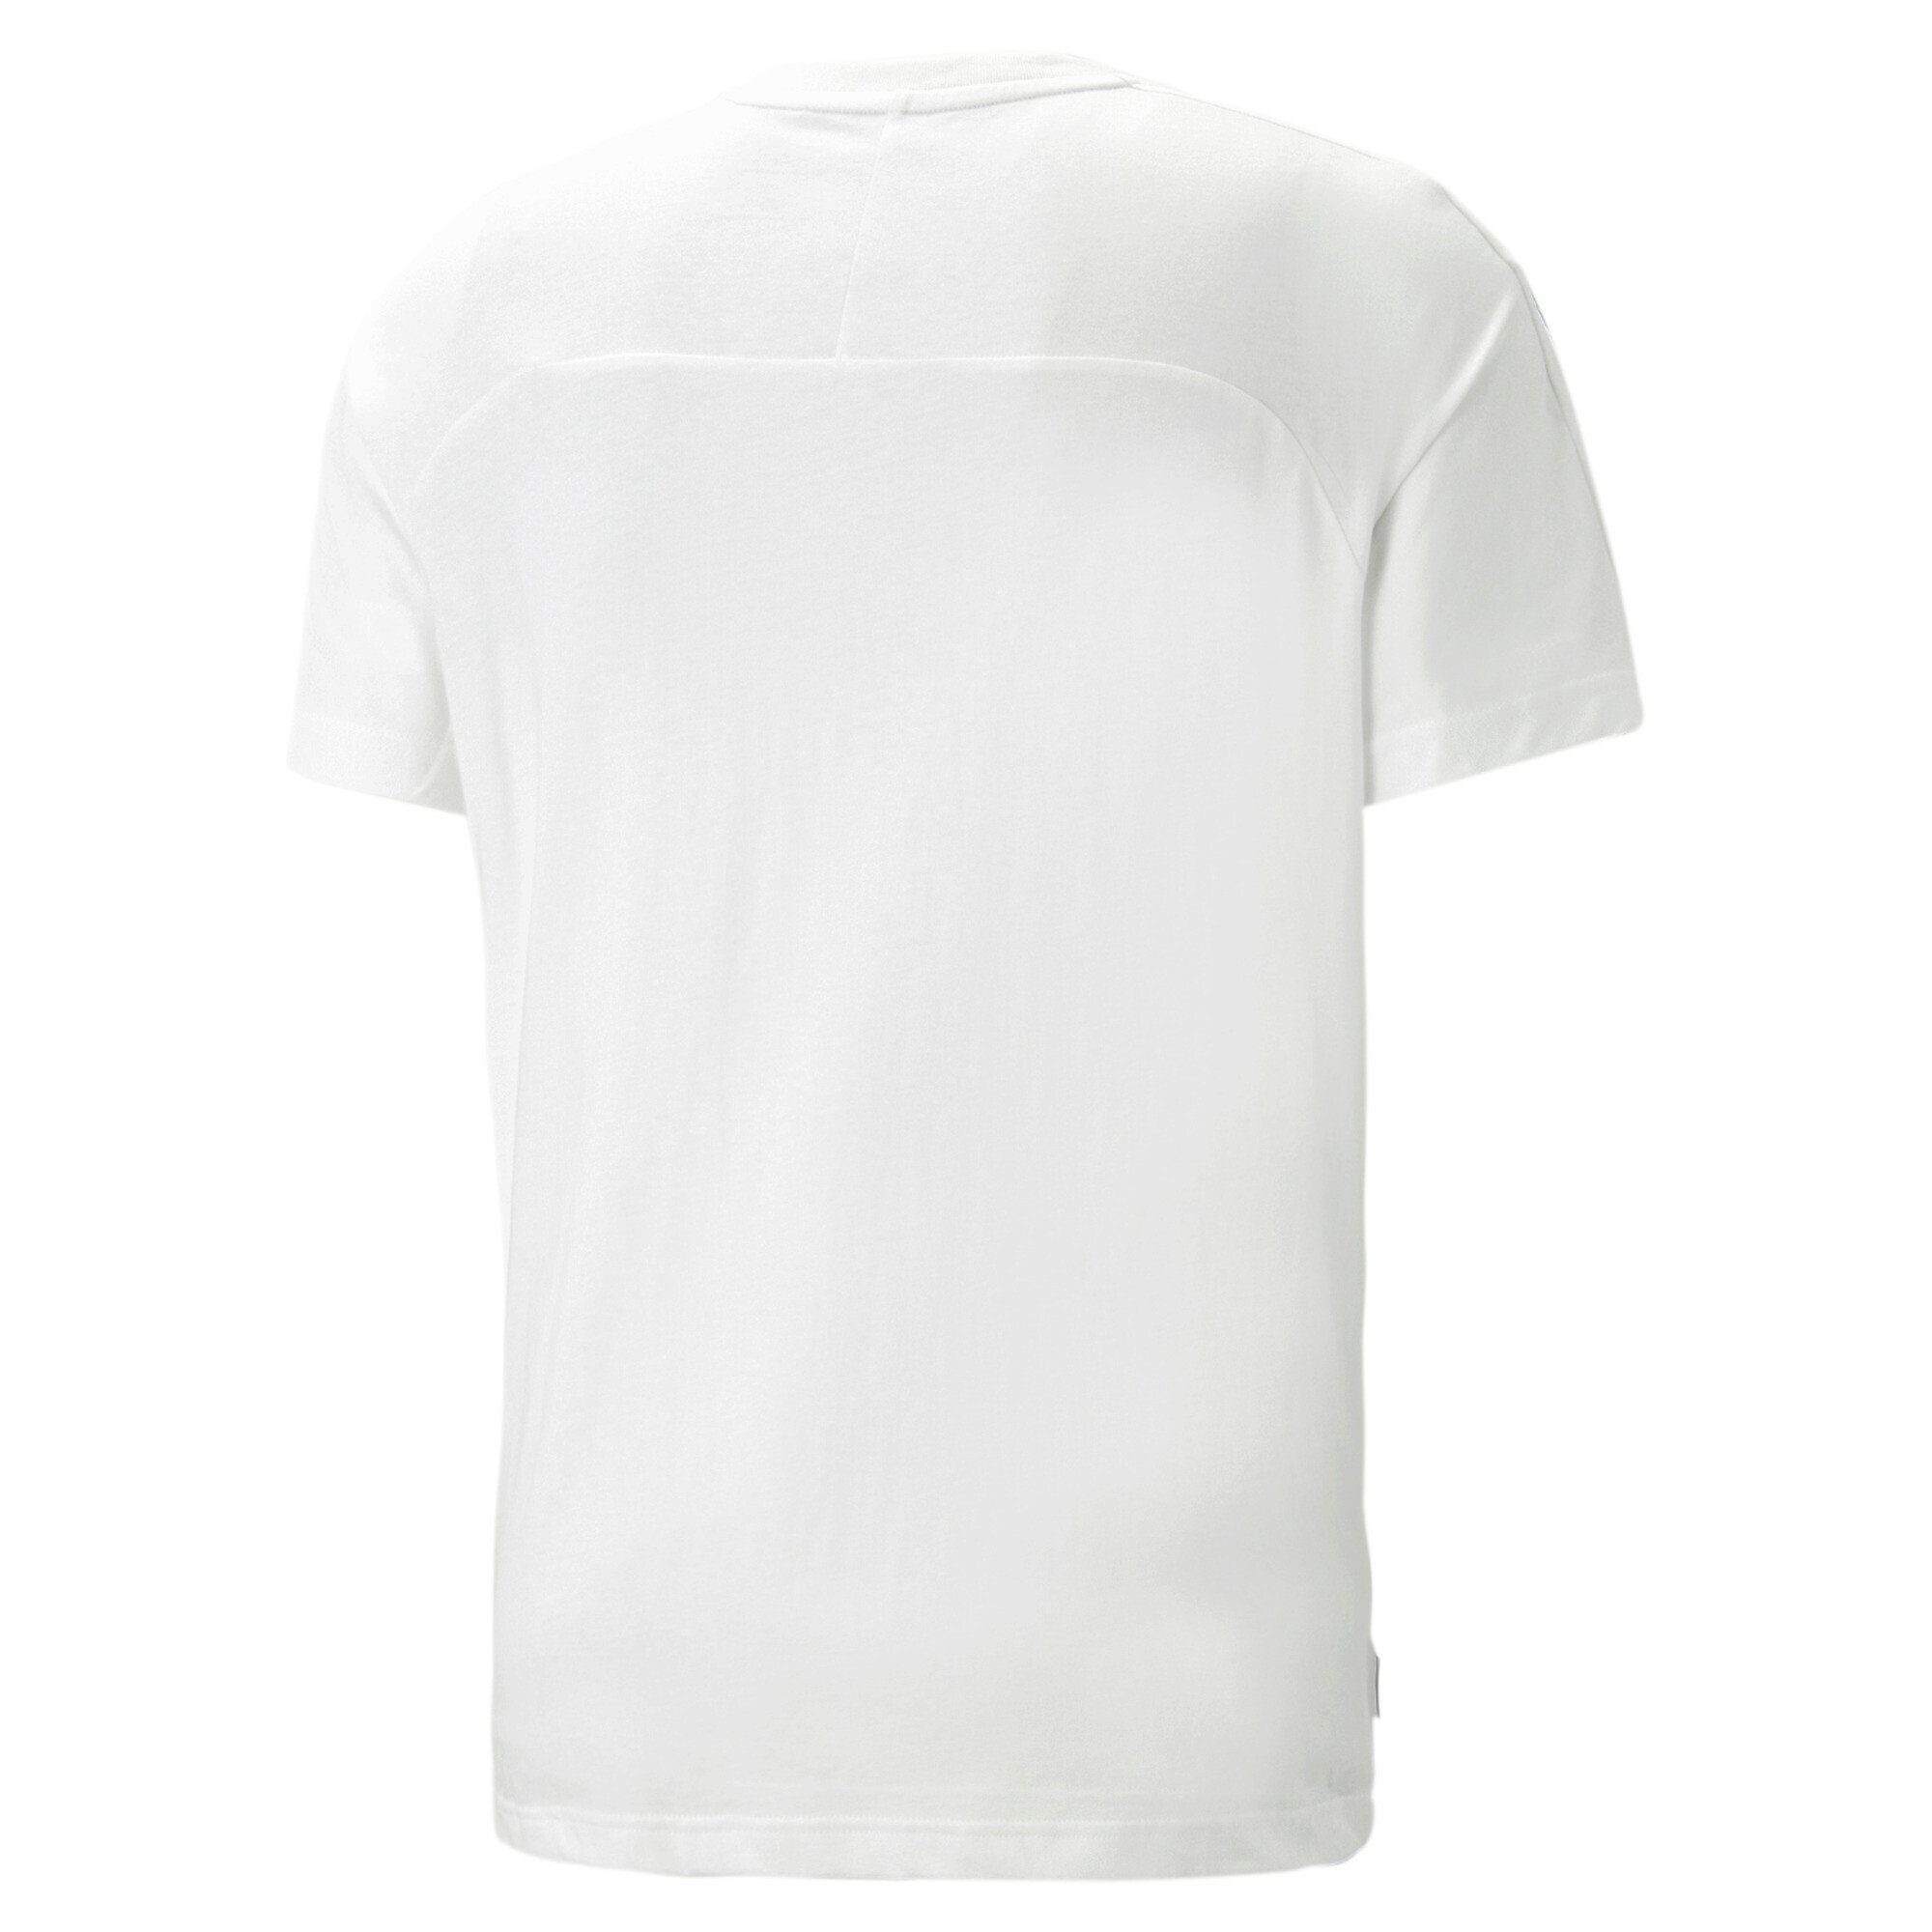 Herren MT7 White T-Shirt T-Shirt PUMA Mercedes-AMG Motorsport